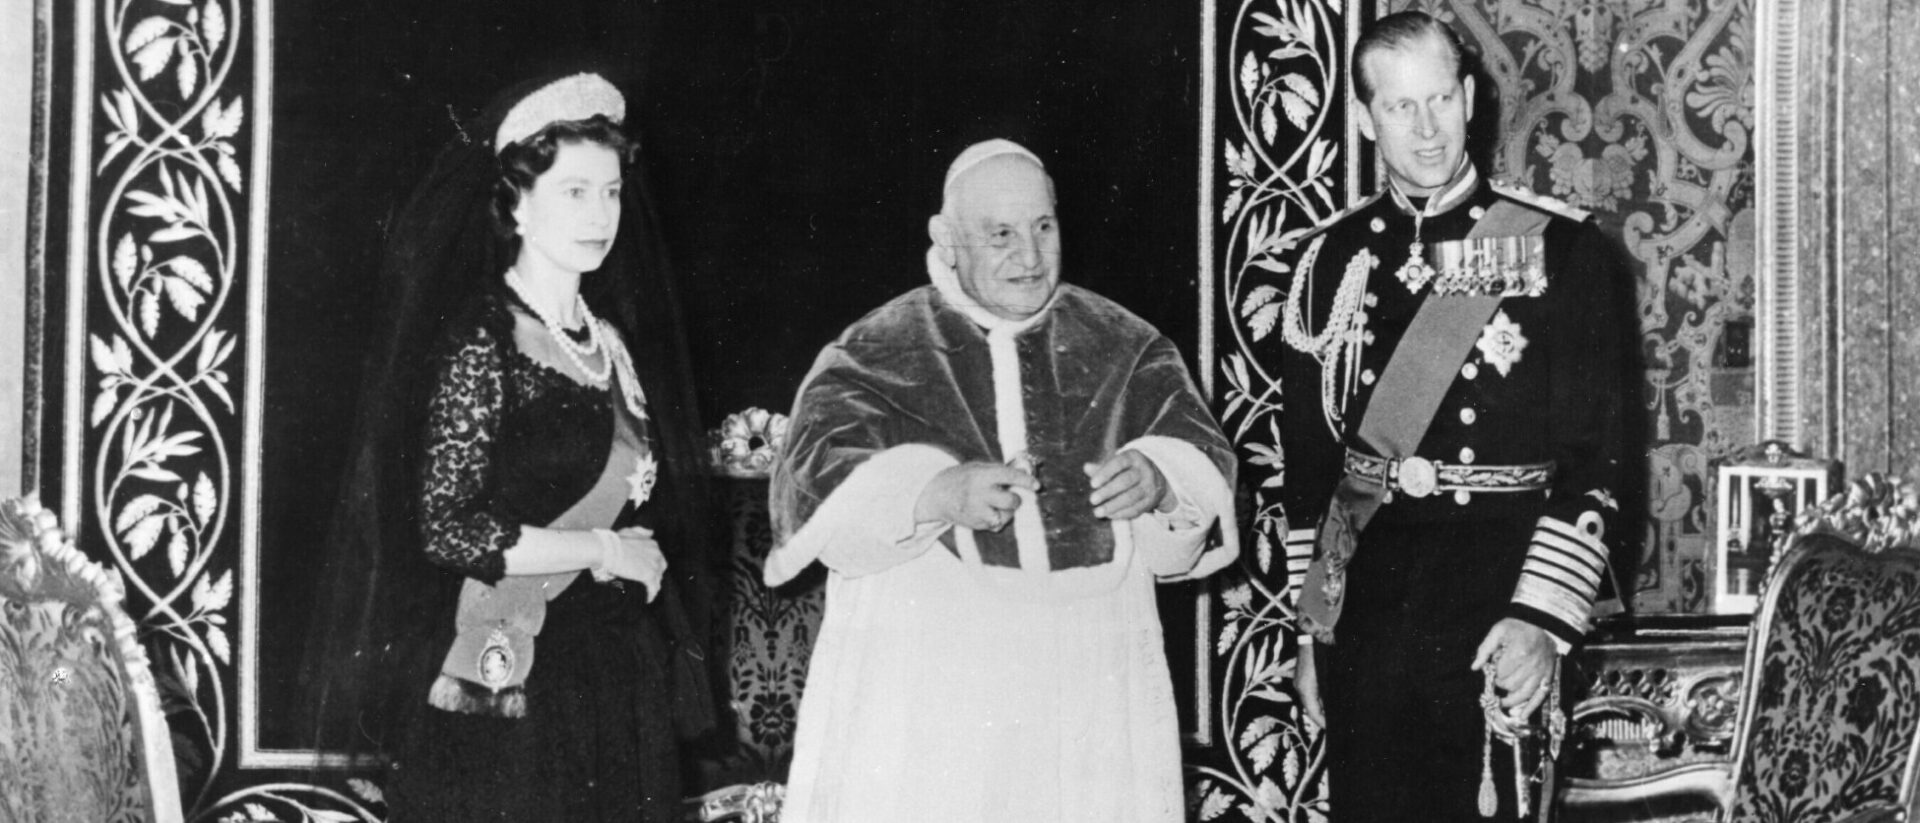 Pope John XXIII - here with Queen Elizabeth II and Prince Philip.